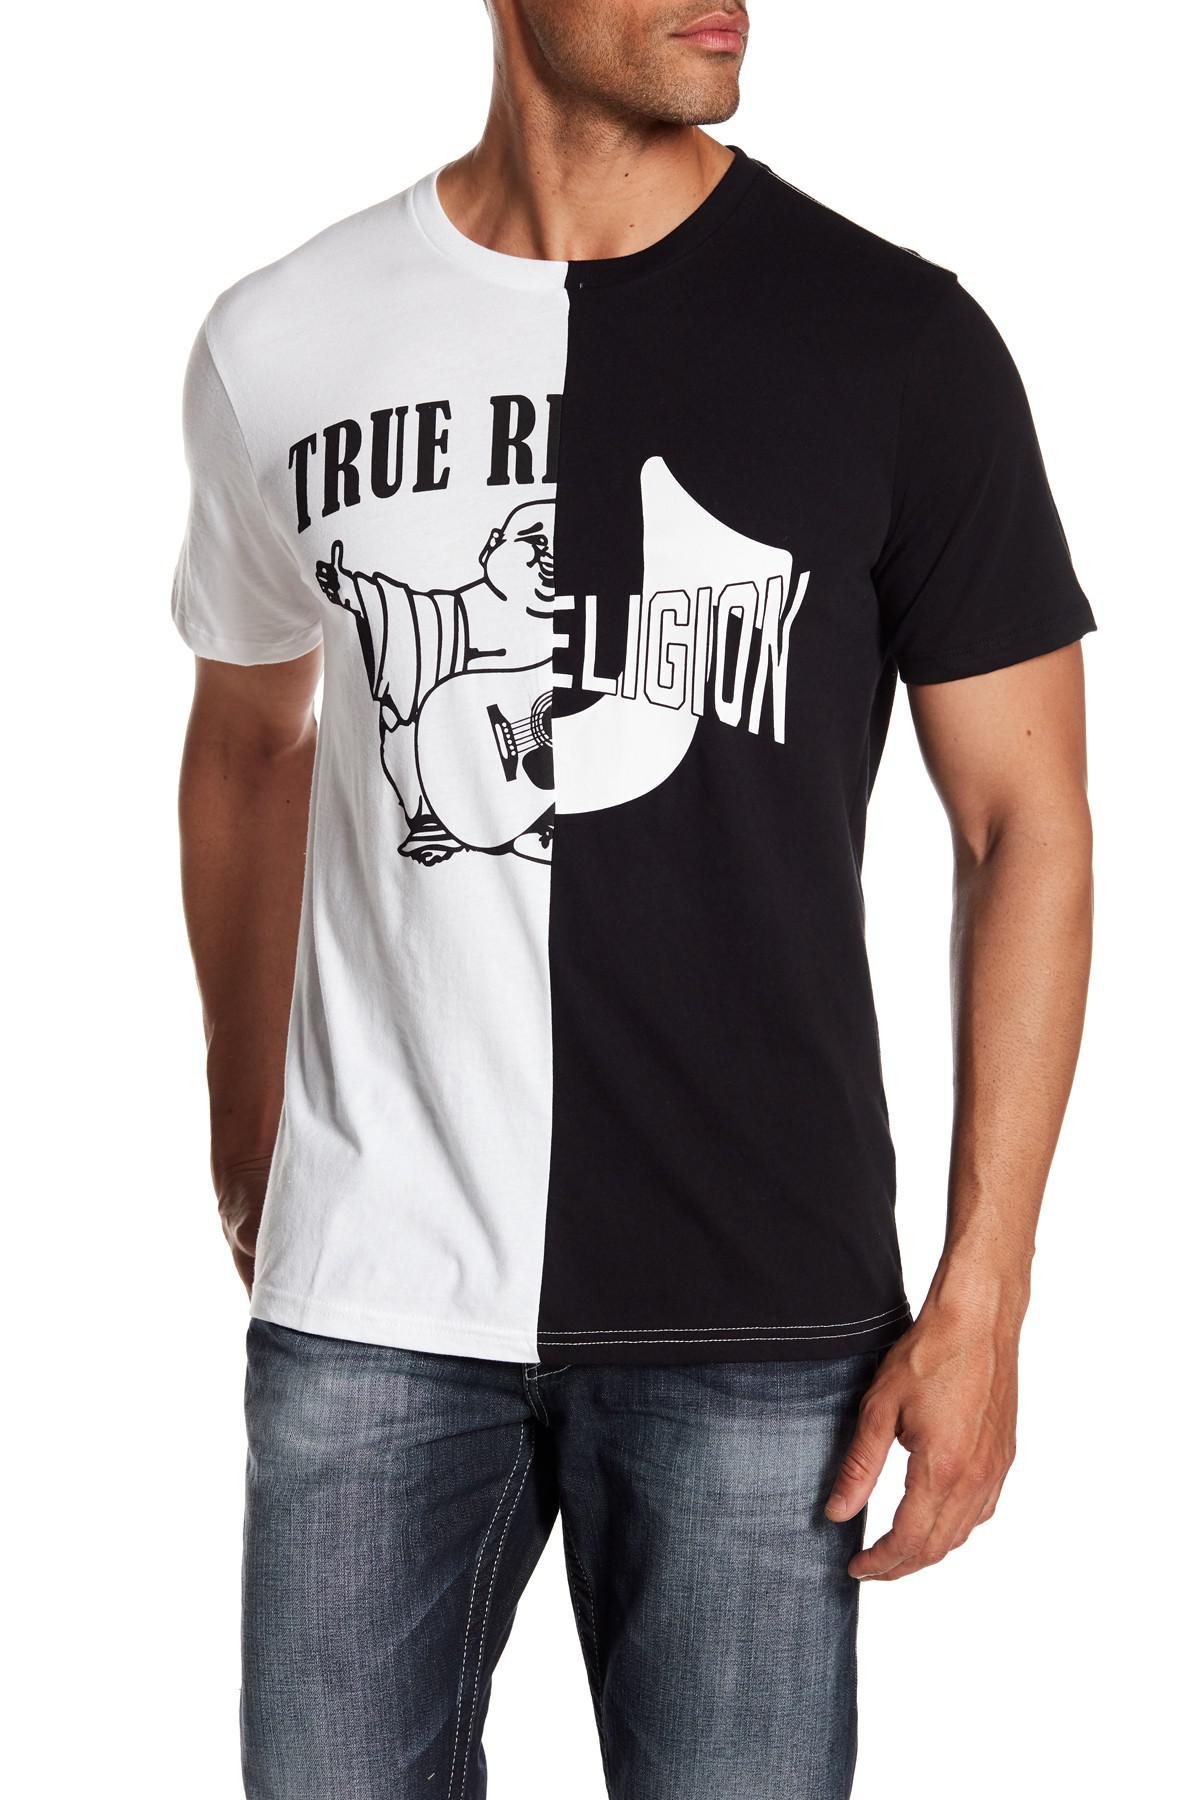 true religion black and white shirt online